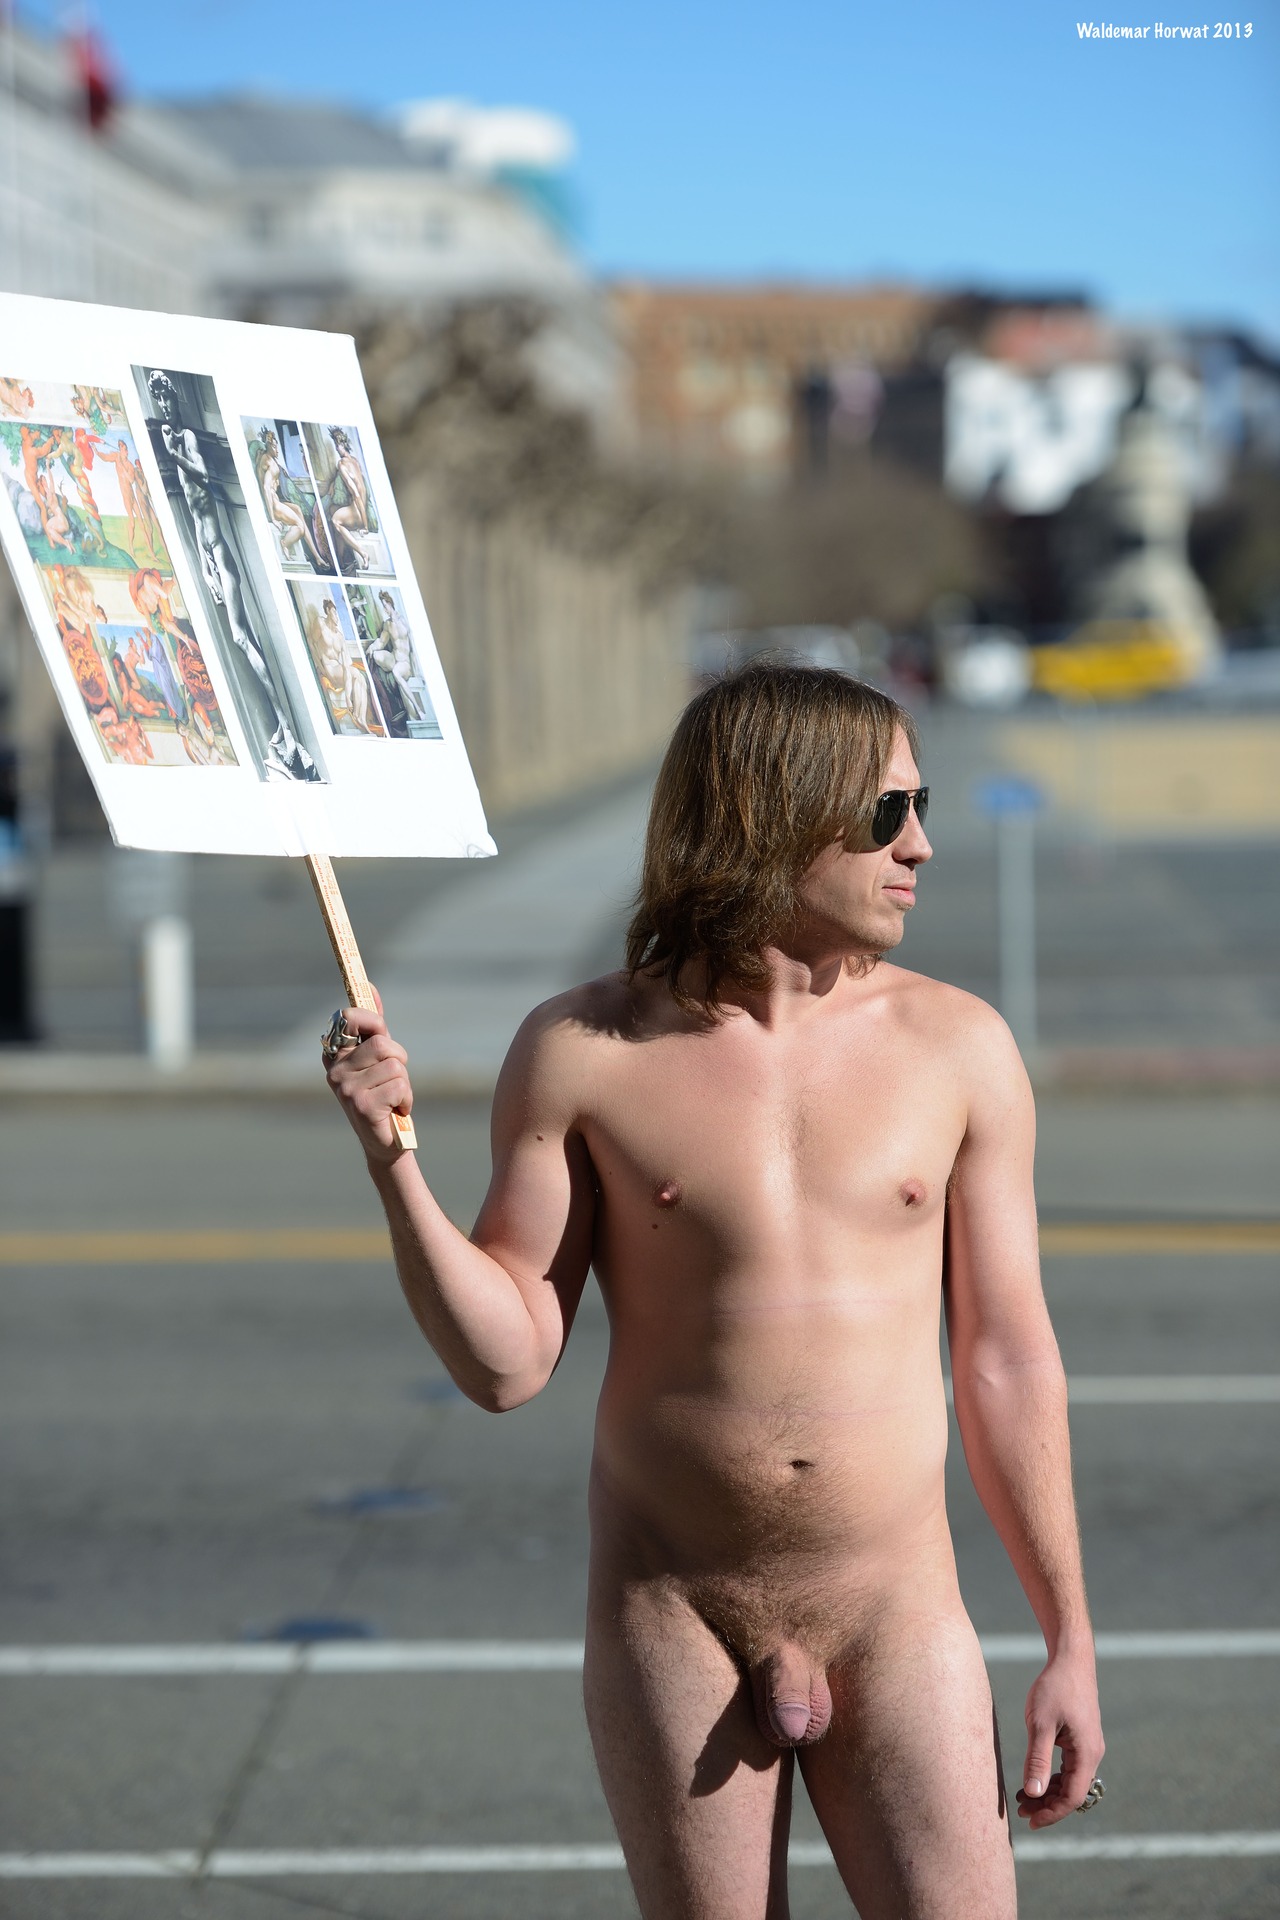 https://www.nudismlife.com/galleries/nudists_and_nude/nudist_cabana/nudist_cabana_878.jpg